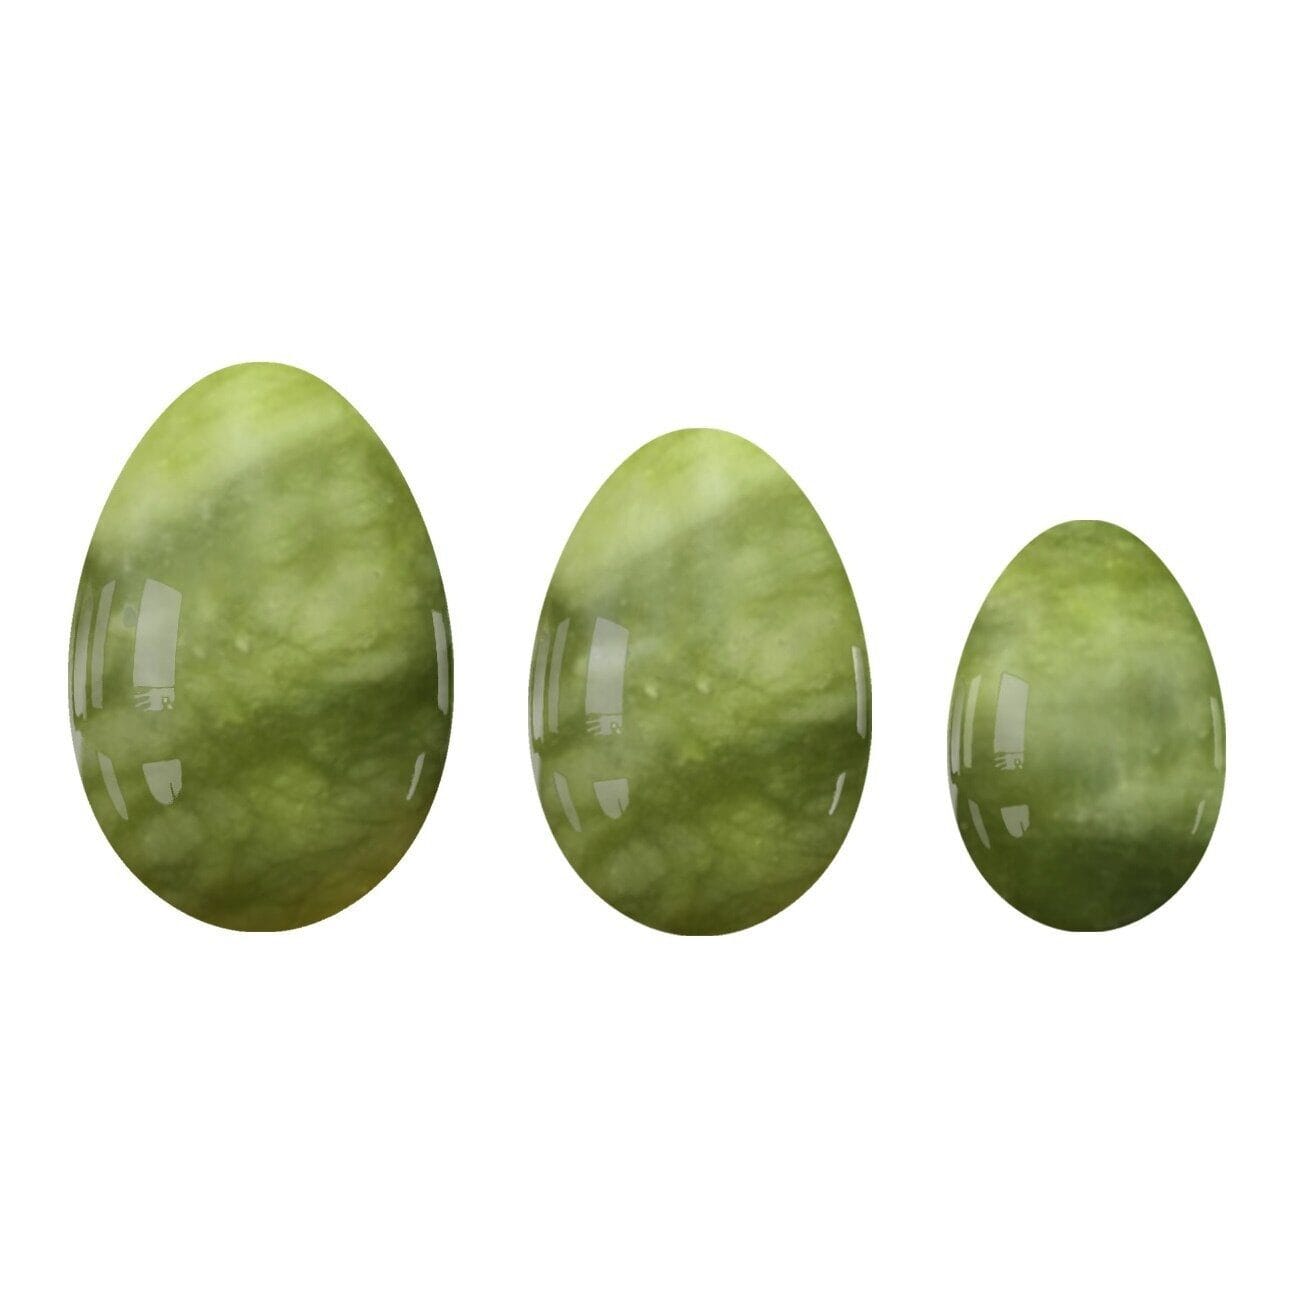 100% Natural Jade Yoni Egg for Kegel Exercise (Set of 3)Yoni Eggs